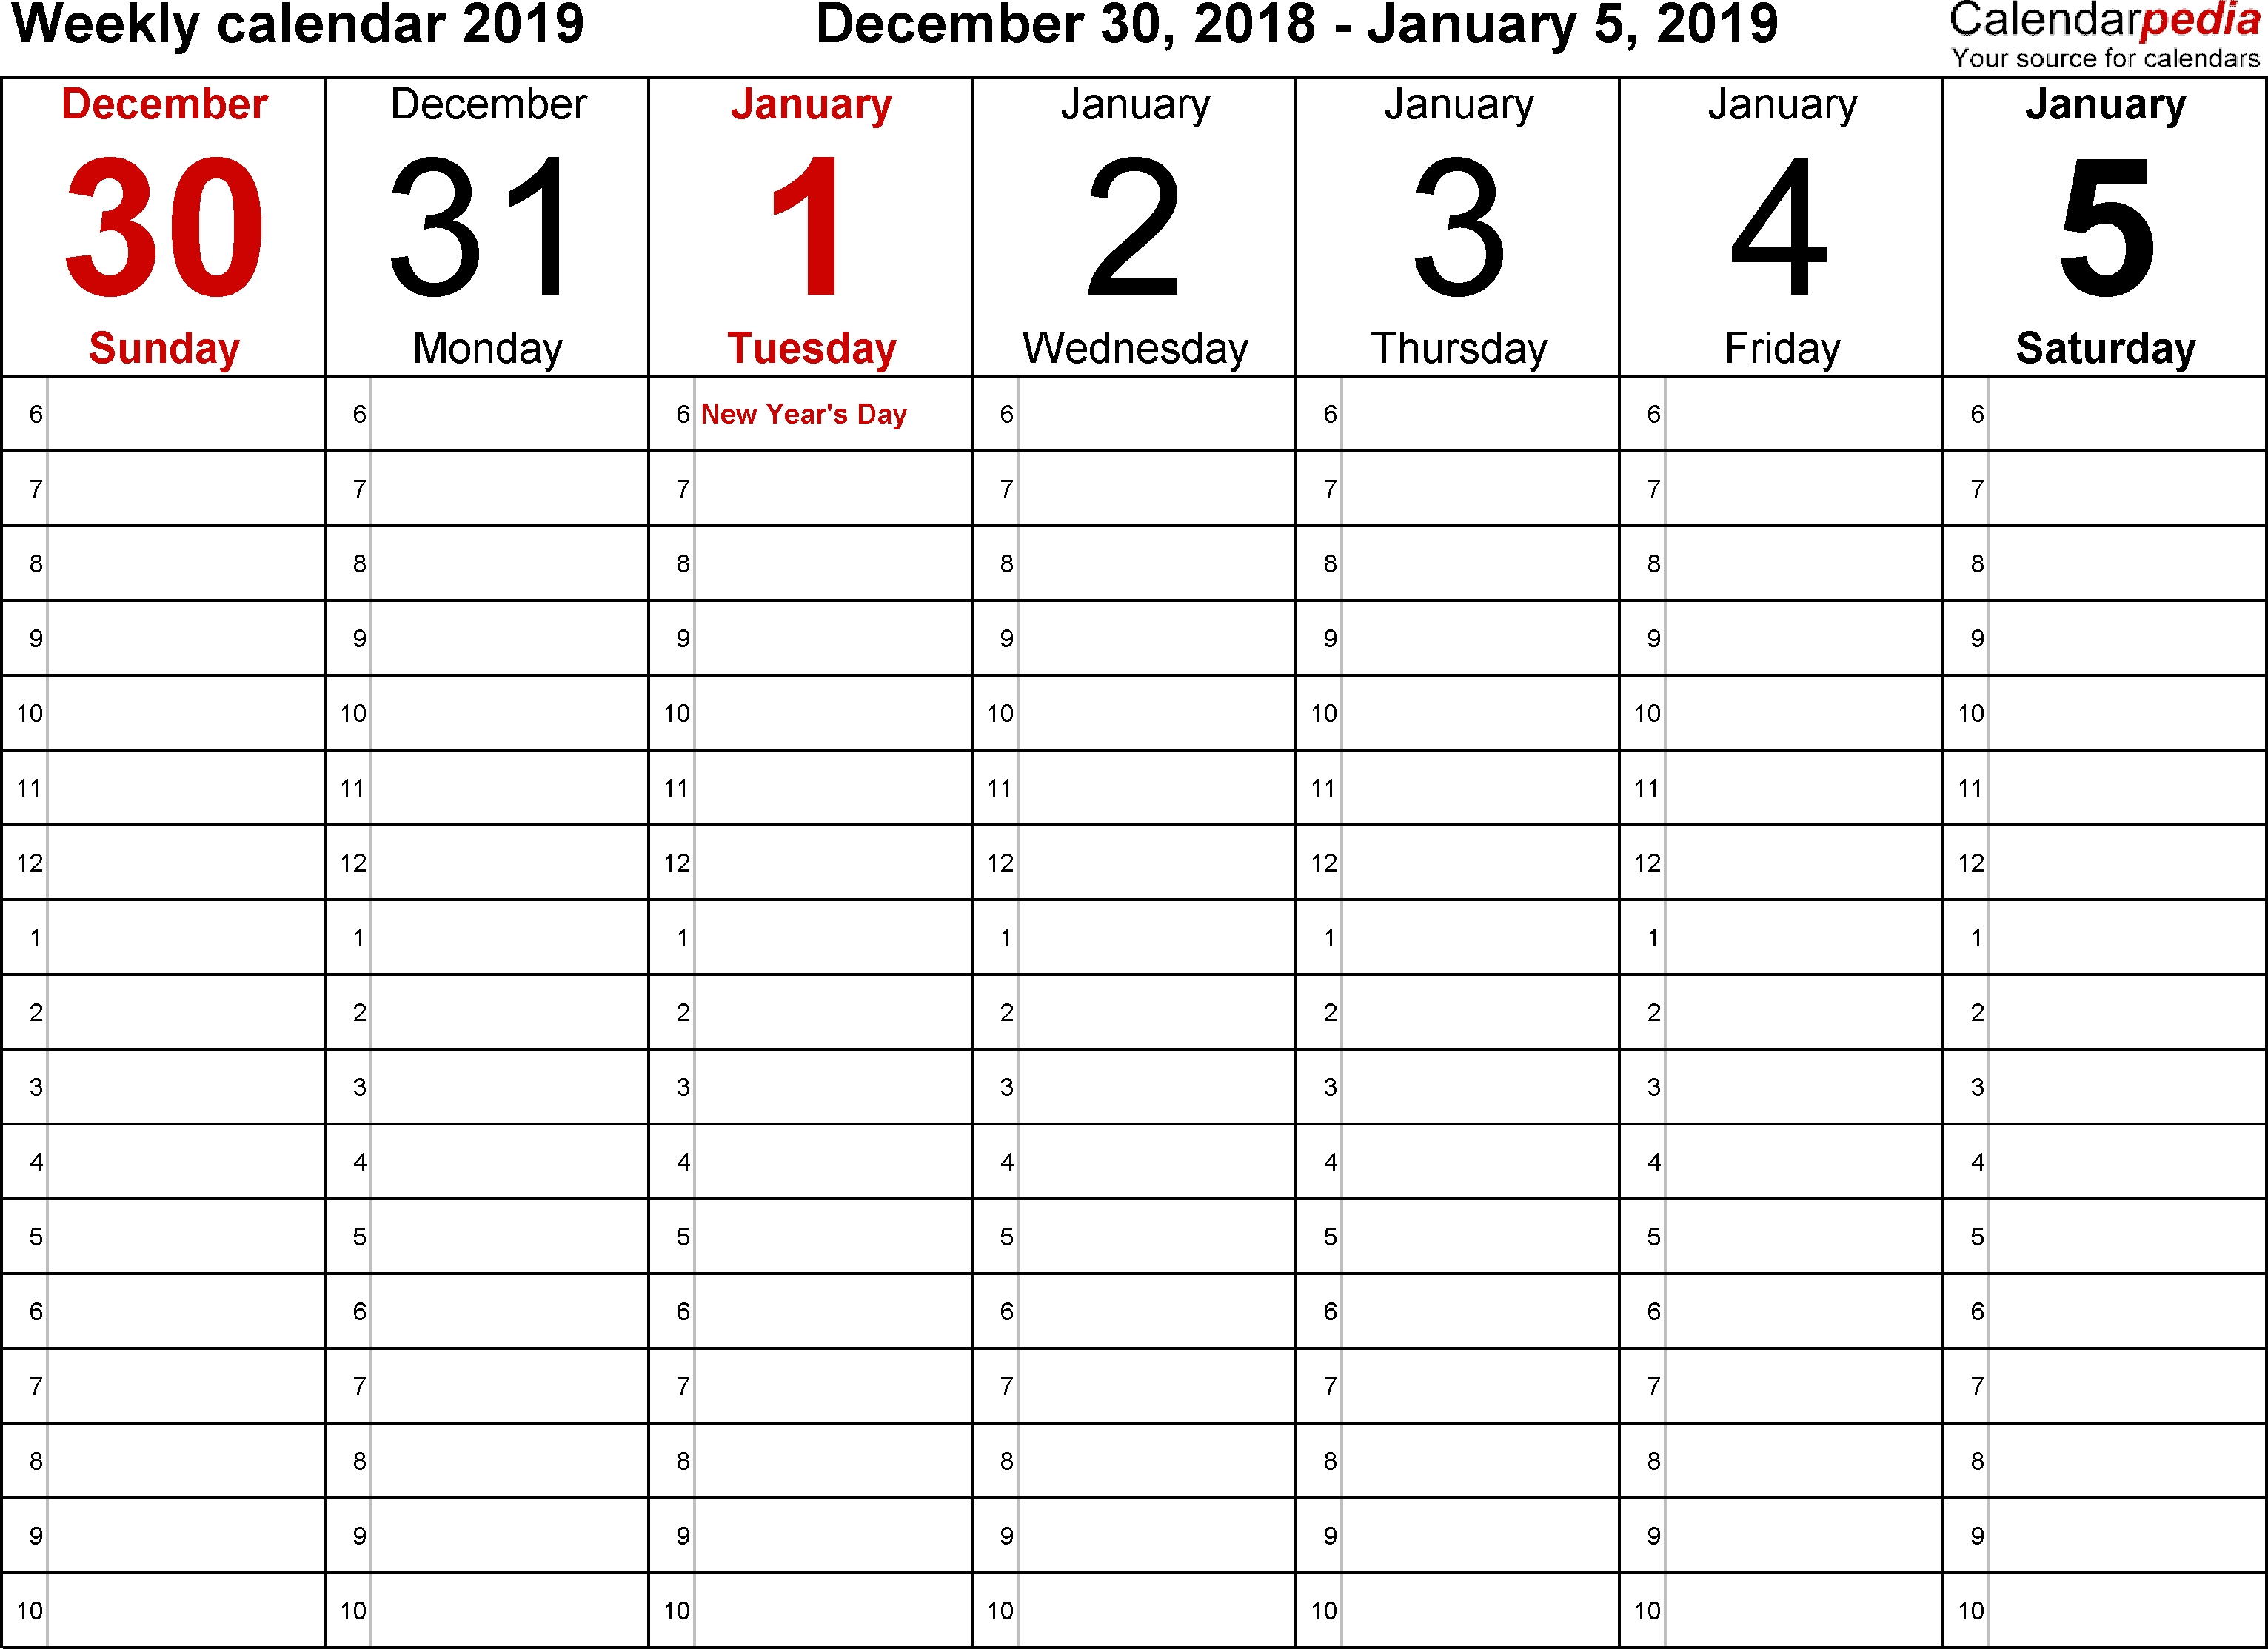 Weekly Calendar 2019 For Word - 12 Free Printable Templates regarding Week Five Date Calendars Templates